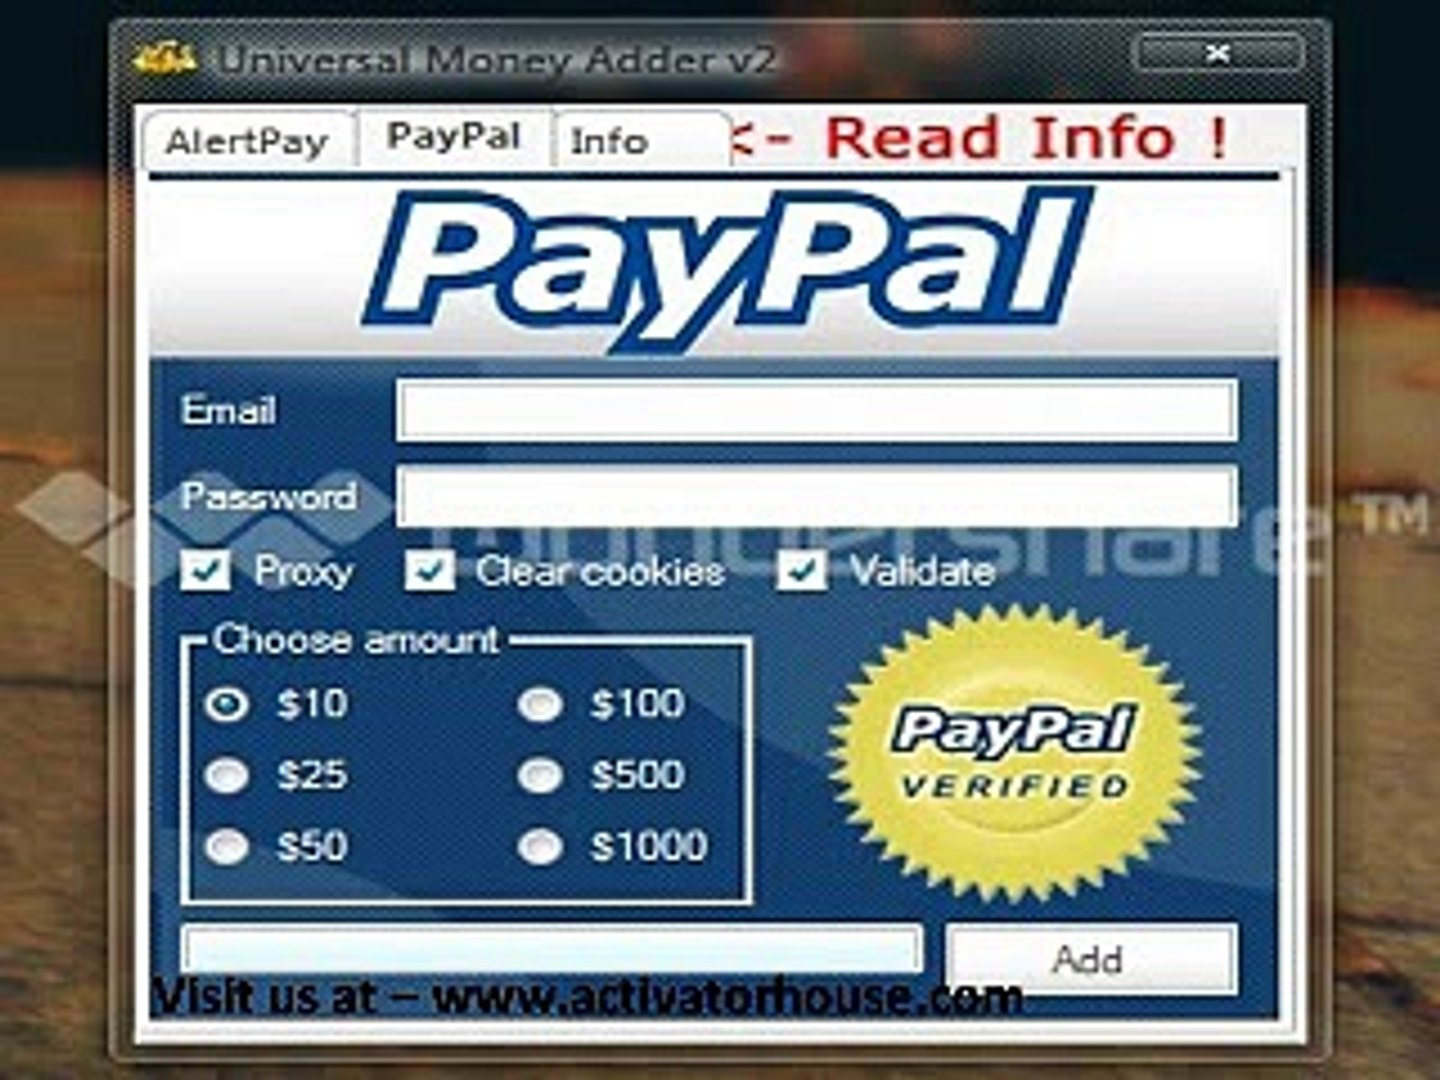 Paypal Money Generator 2015 Free No Survey Paypal Money Adder1